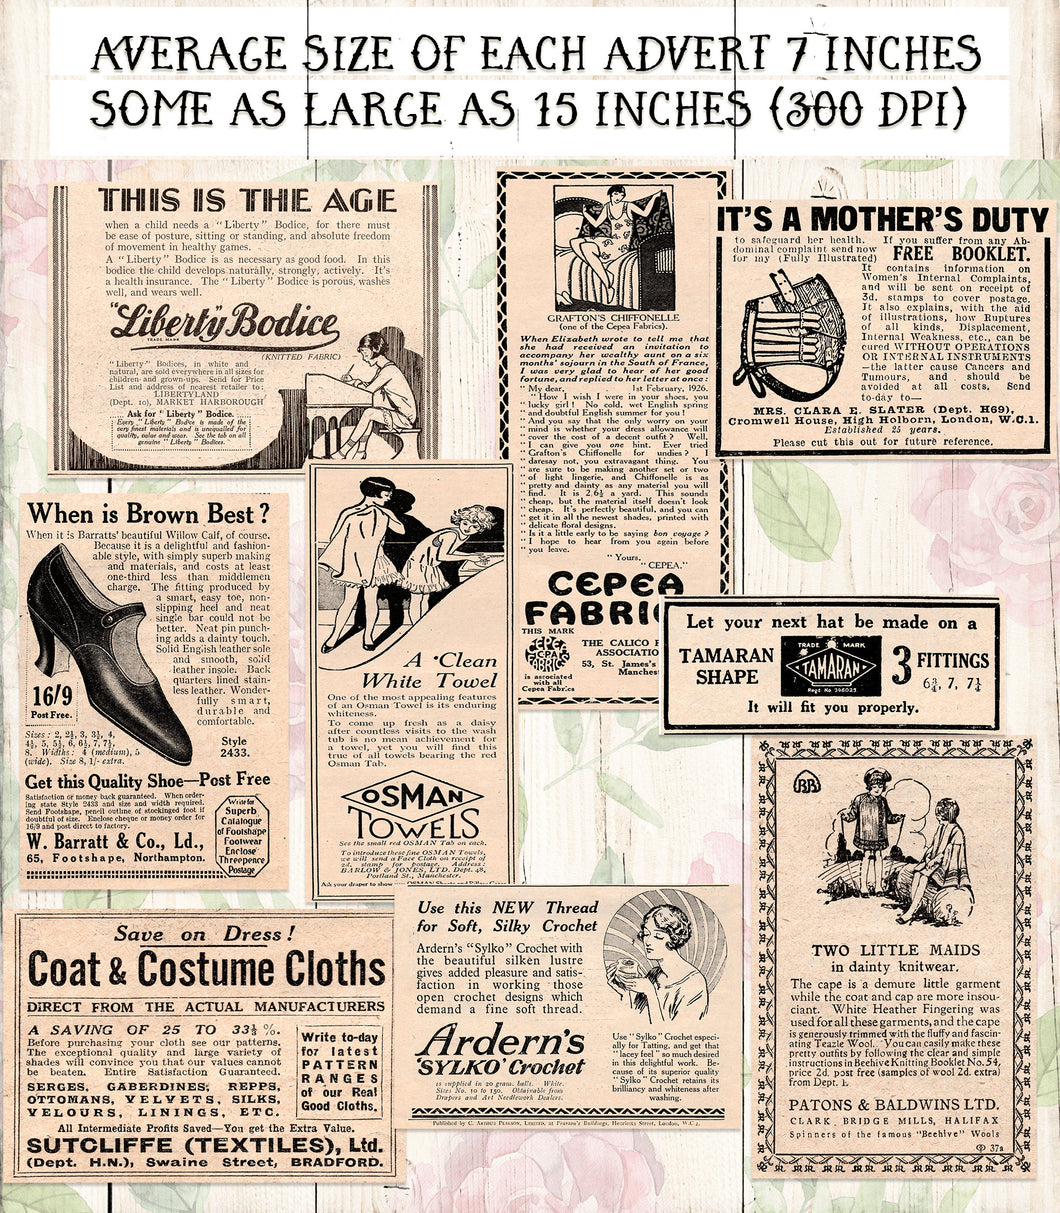 Vintage Clothing Advertisements - British newspaper adverts. Commercial use ephemera for scrapbooking etc.